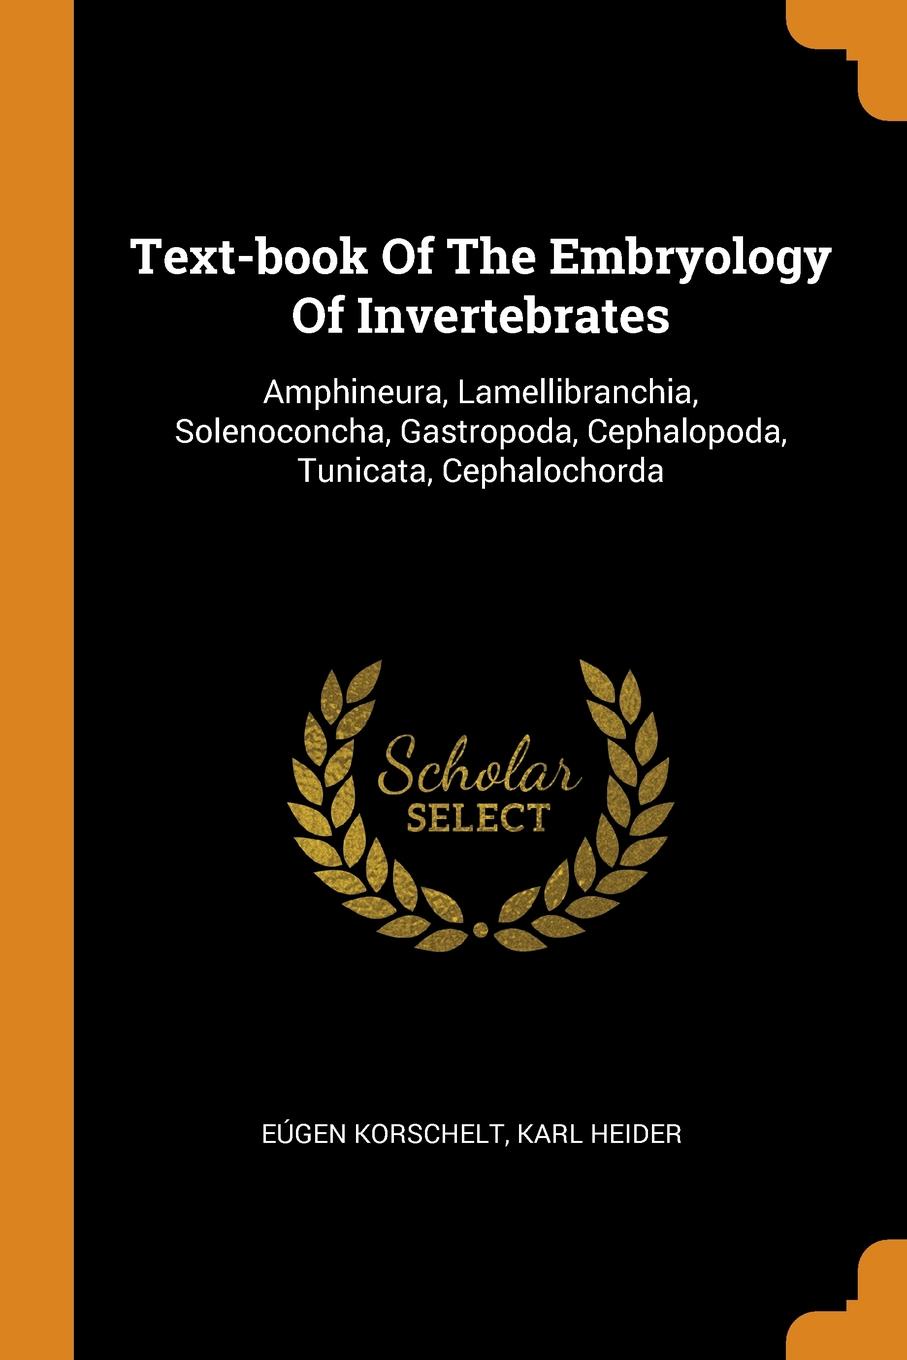 Text-book Of The Embryology Of Invertebrates. Amphineura, Lamellibranchia, Solenoconcha, Gastropoda, Cephalopoda, Tunicata, Cephalochorda